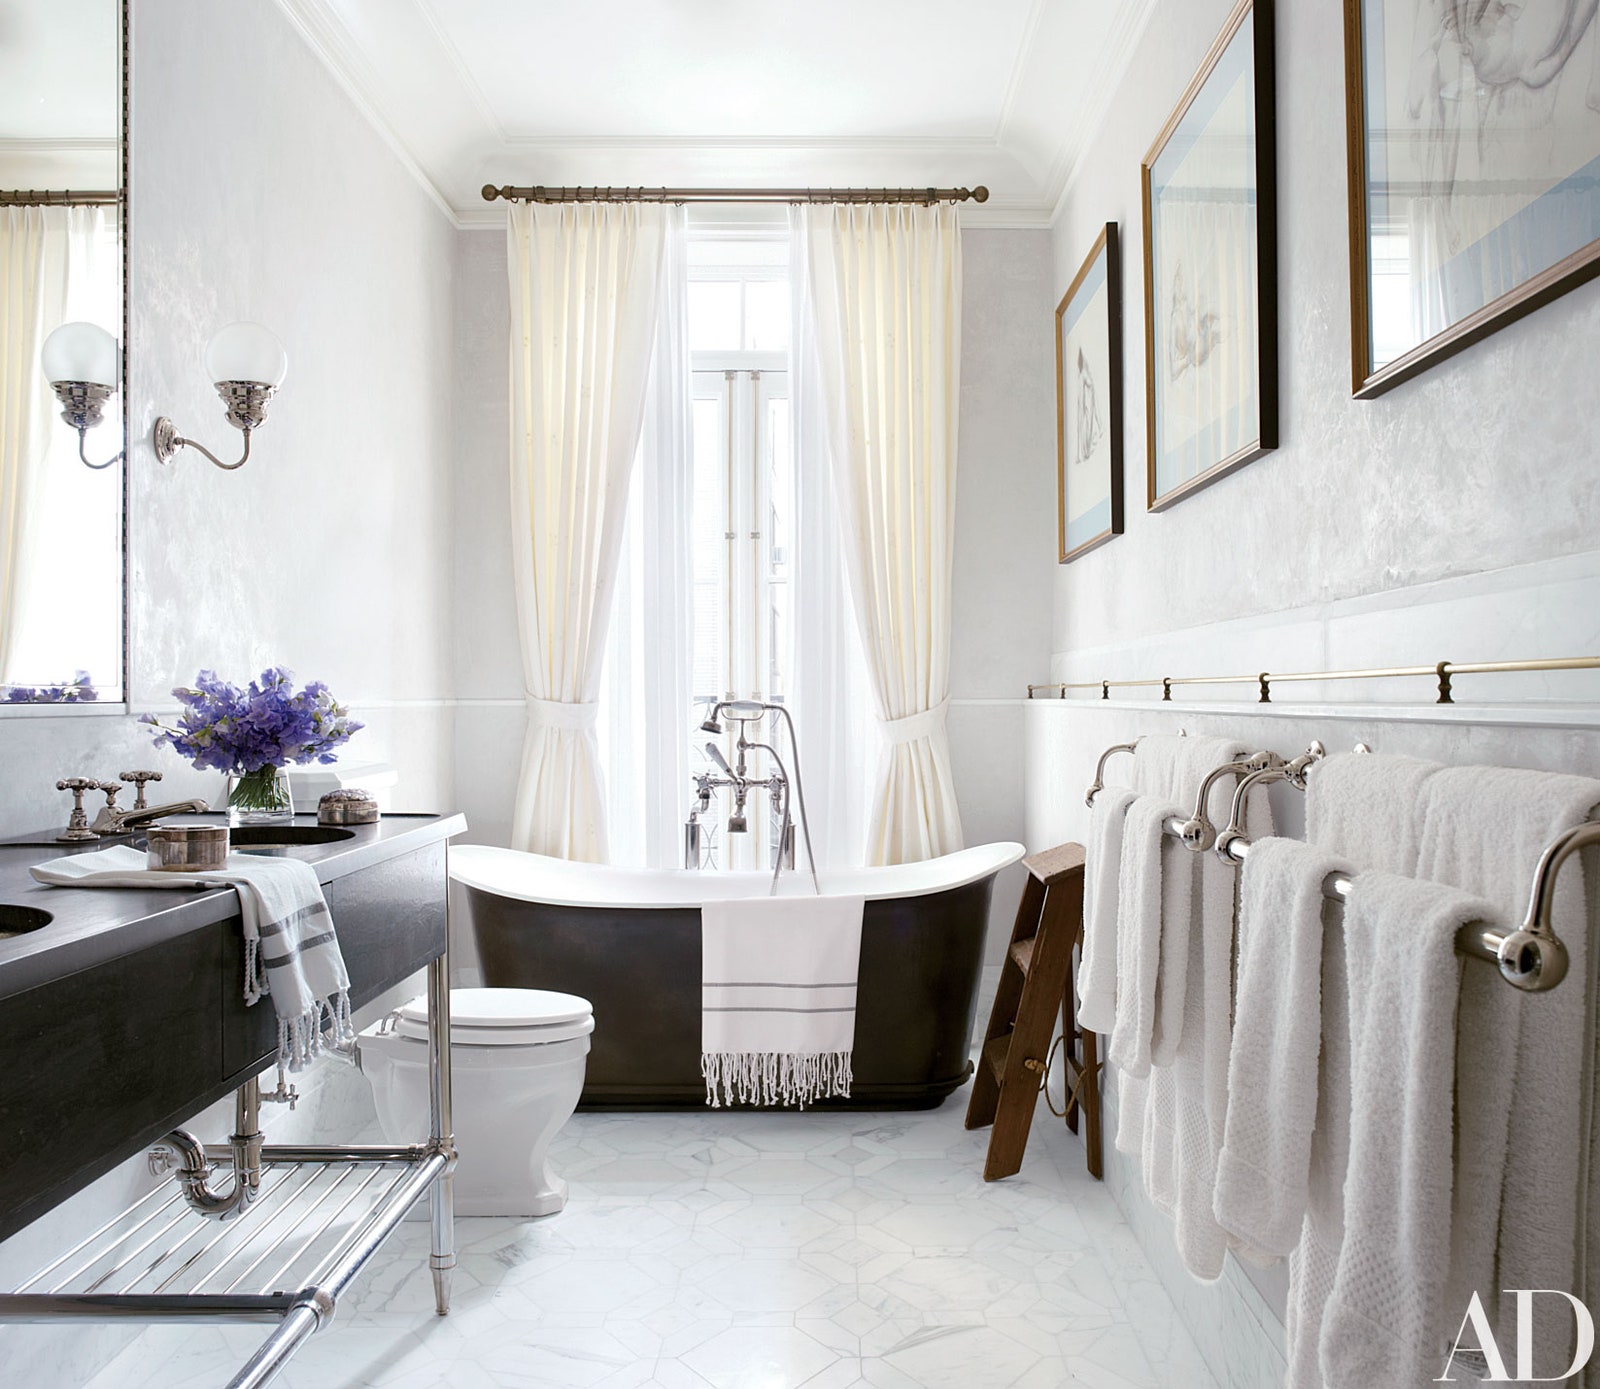 barbara fransen add brooke shields bathtub scene photo